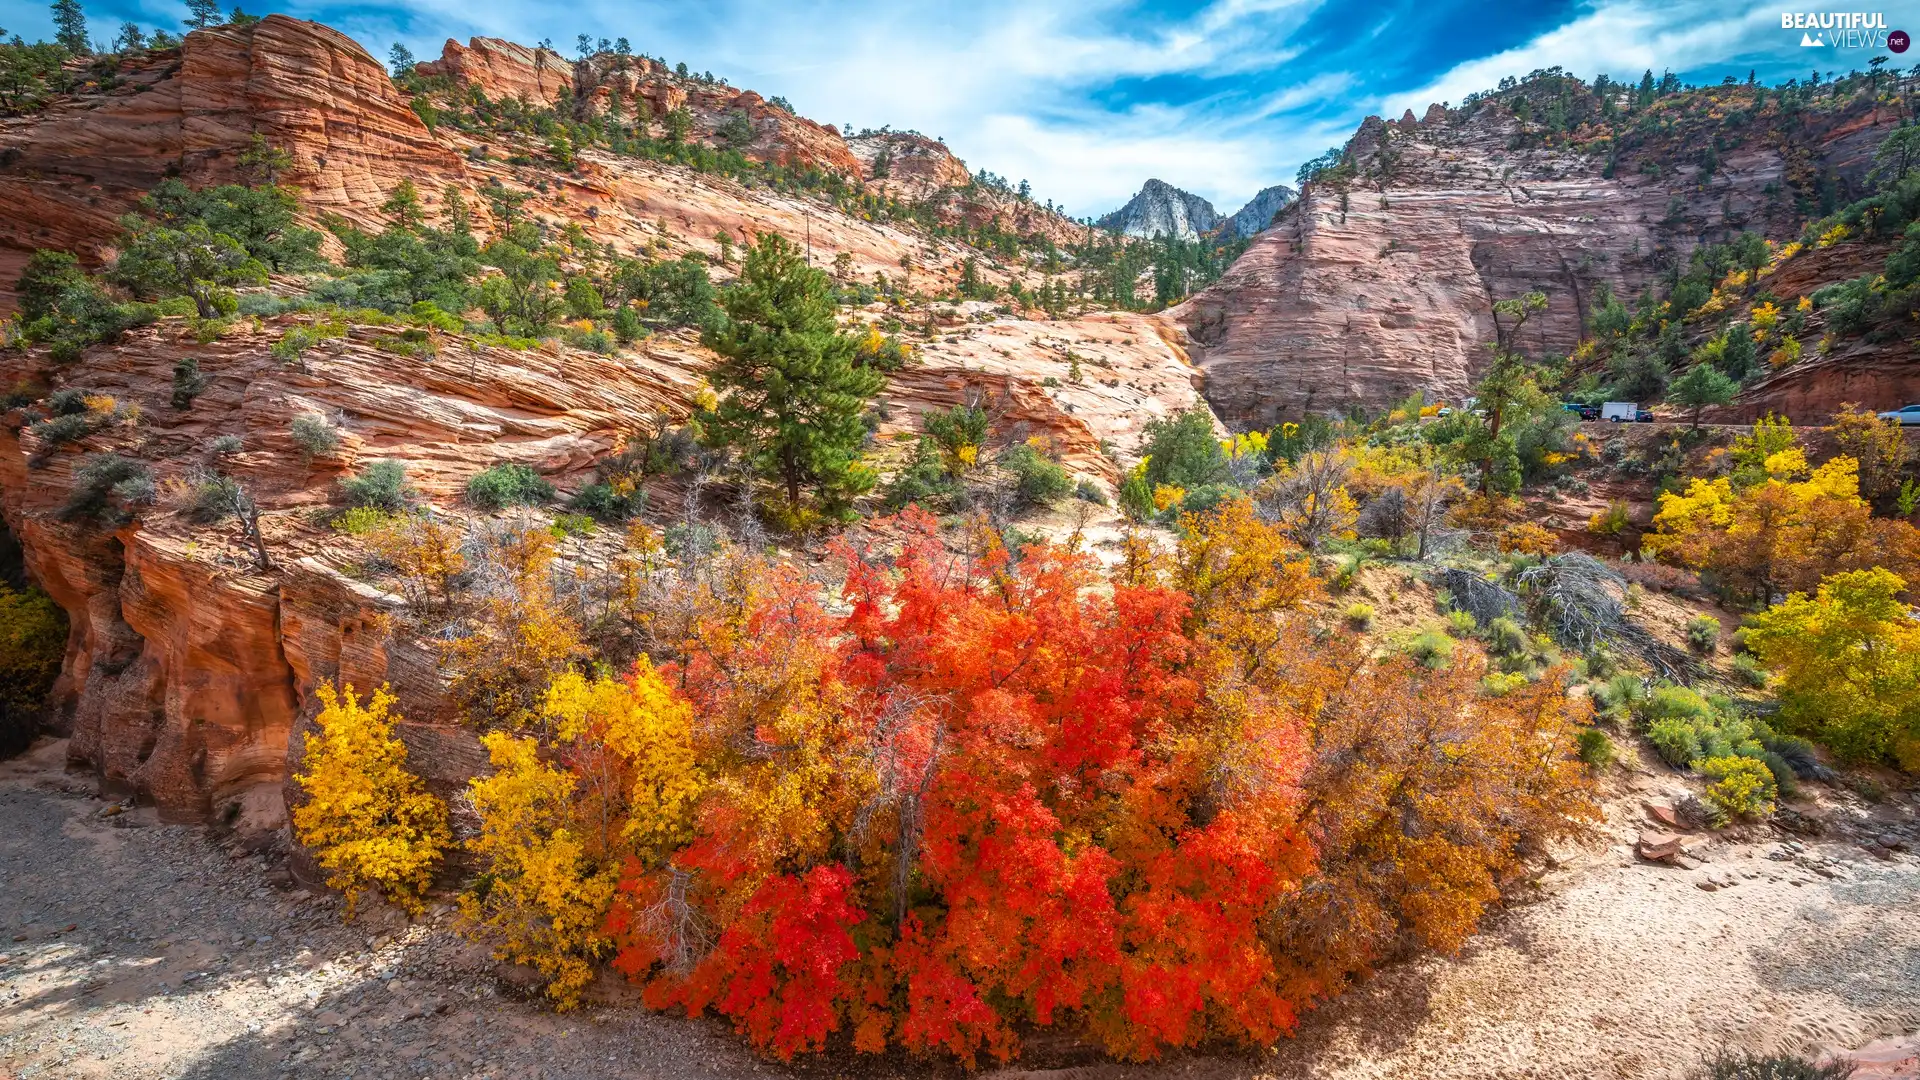 Zion National Park, The United States, VEGETATION, autumn, rocks, Utah State